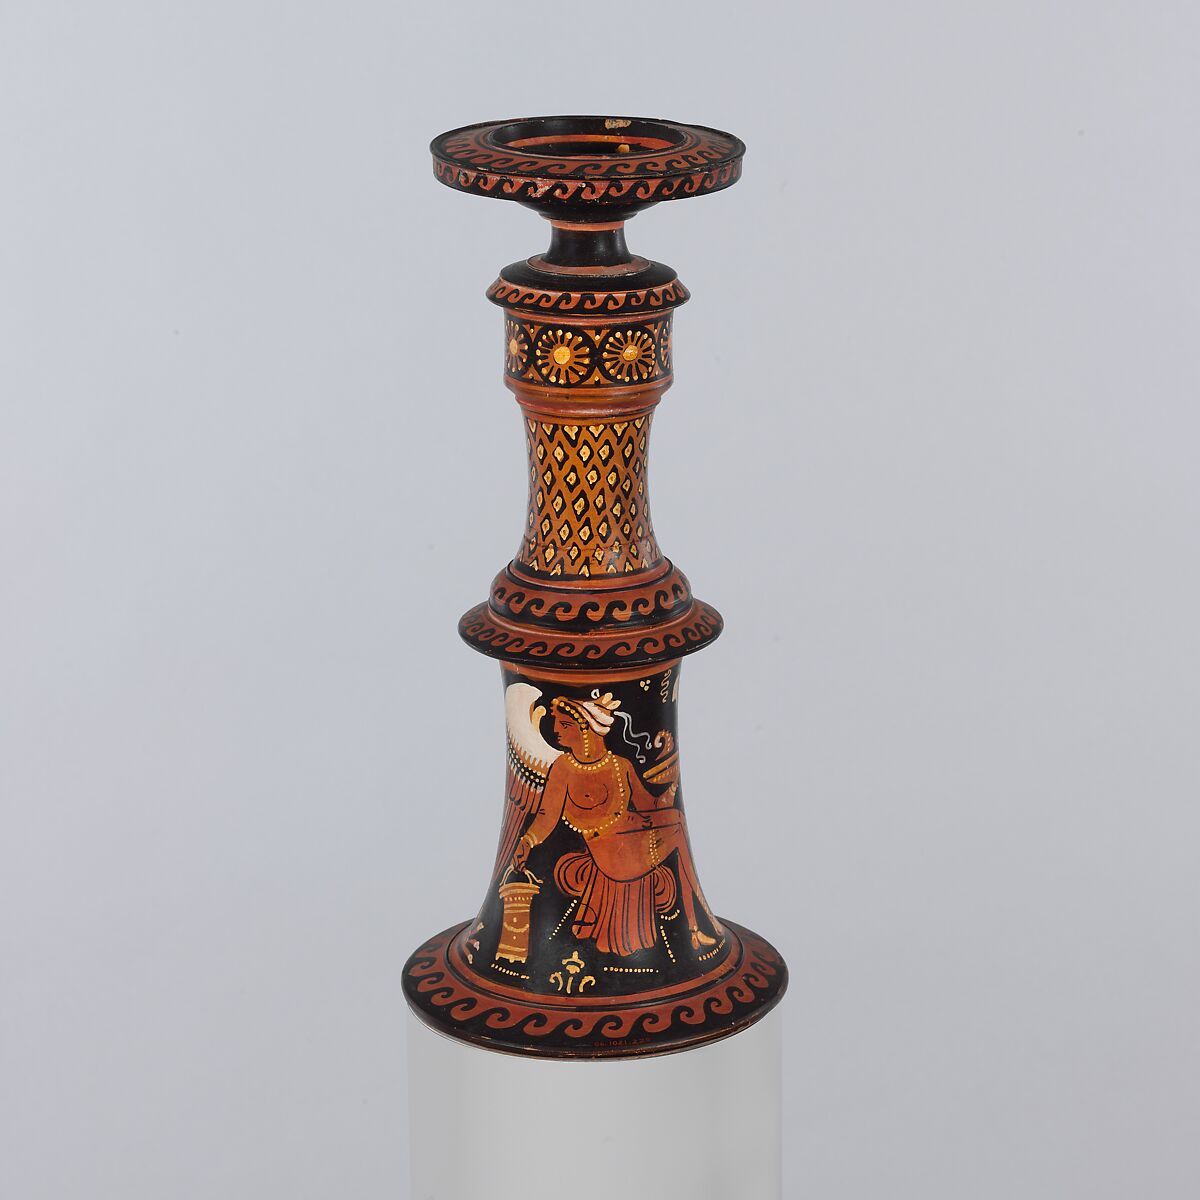 Terracotta thymiaterion (incense burner), Associated with the Stuttgart Group, Terracotta, Greek, South Italian, Apulian 